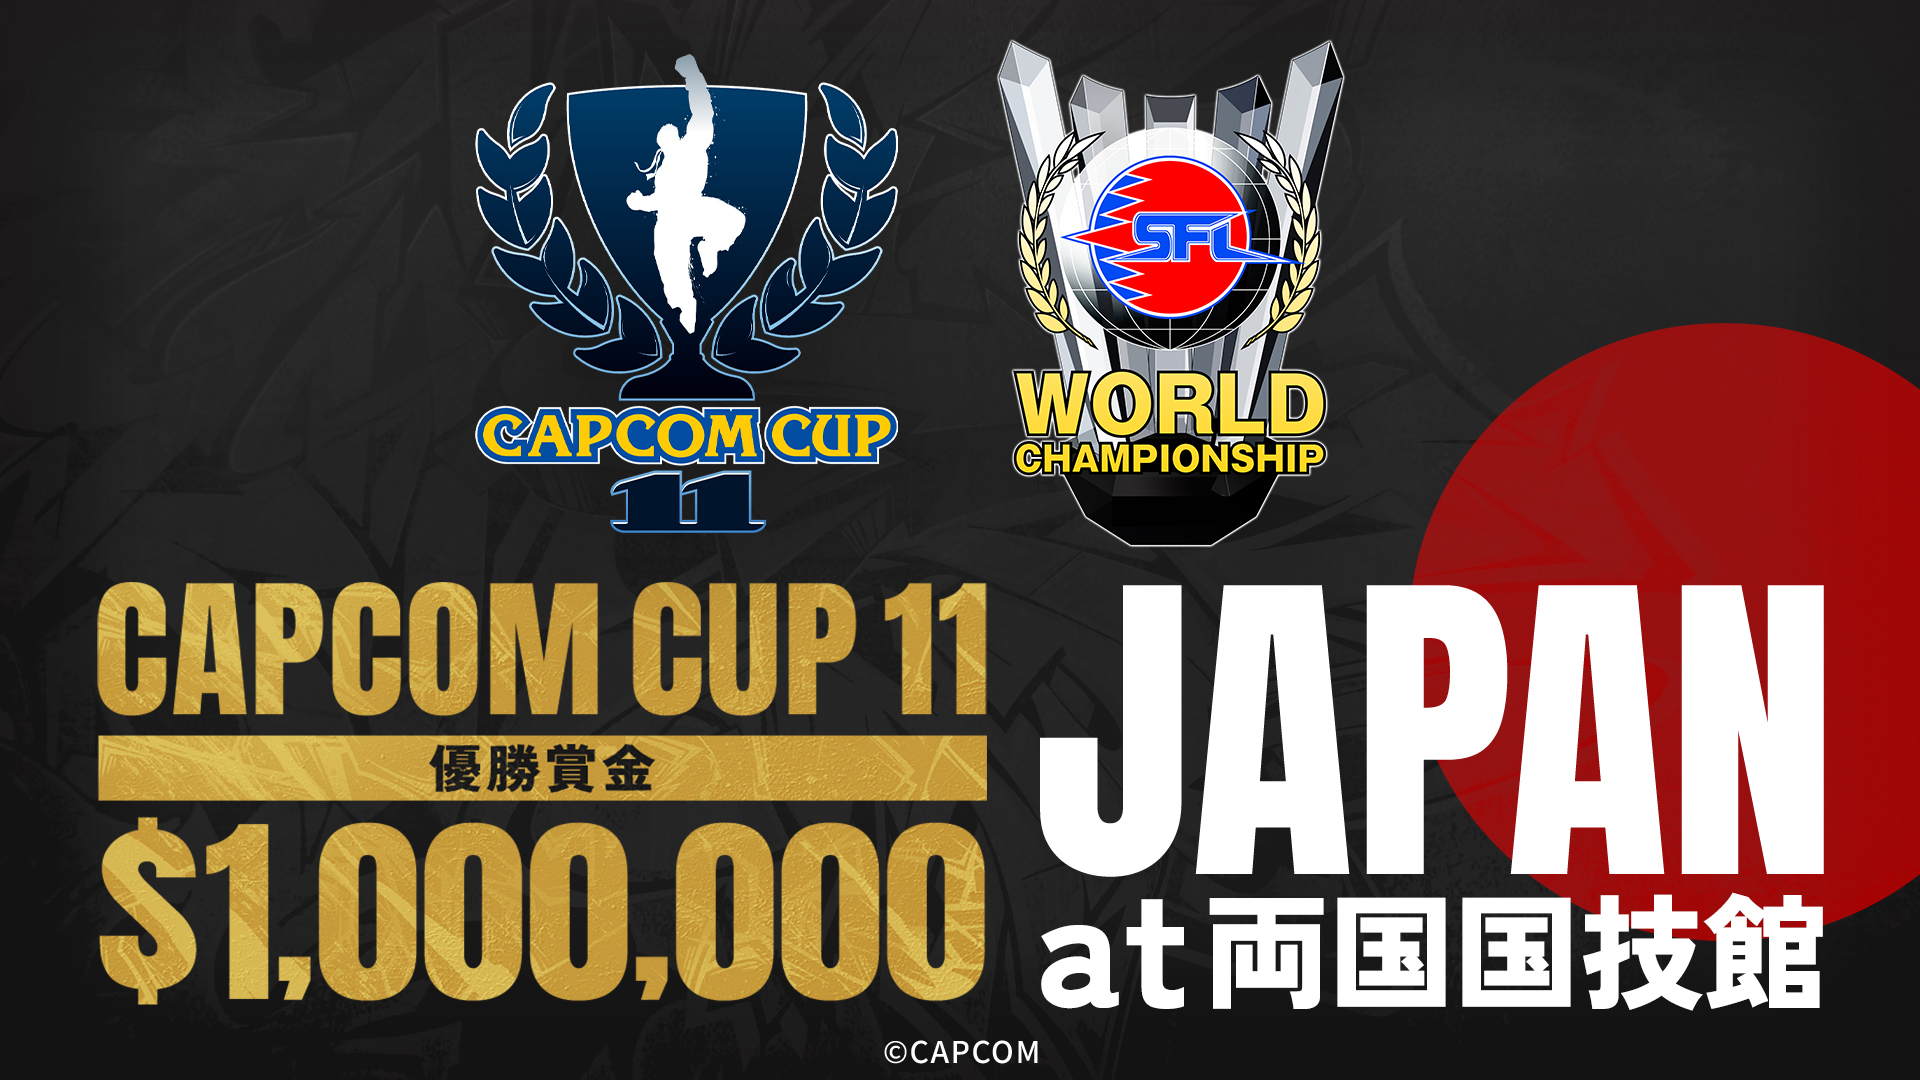 CAPCOM CUP 11 日本開催決定！ 決戦の舞台は「両国国技館」 優勝賞金100万＄を手にするのは誰だ？ 続報をお待ちください！